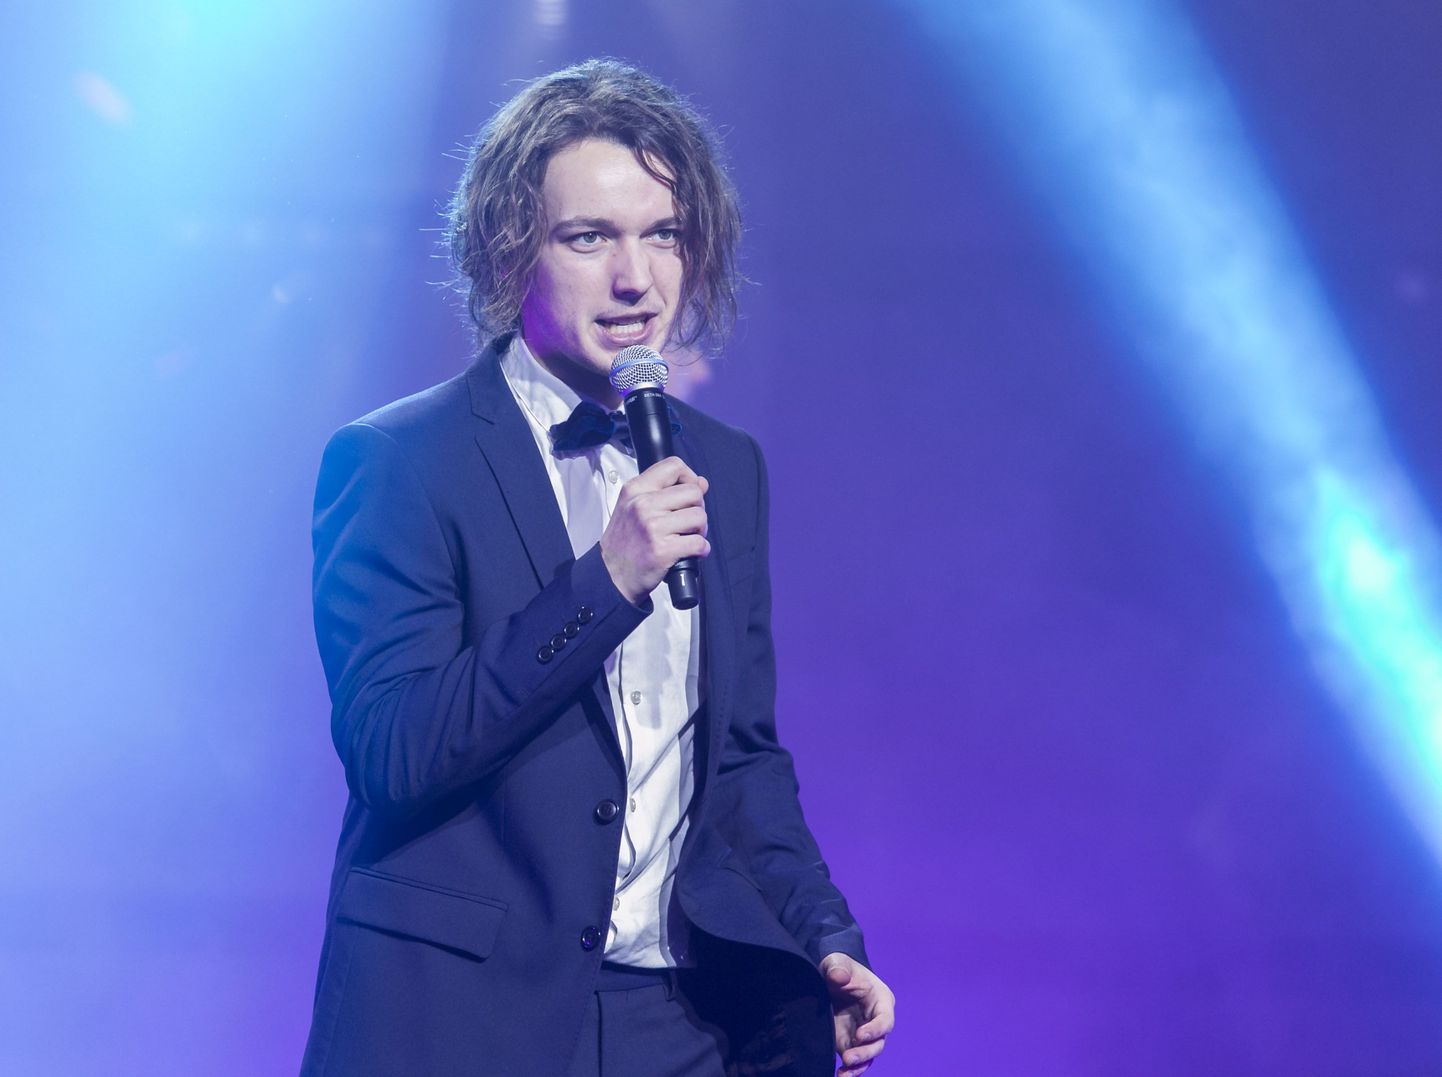 Eesti Laul 2014, esimese poolfinaali salvestus, Norman Salumäe.